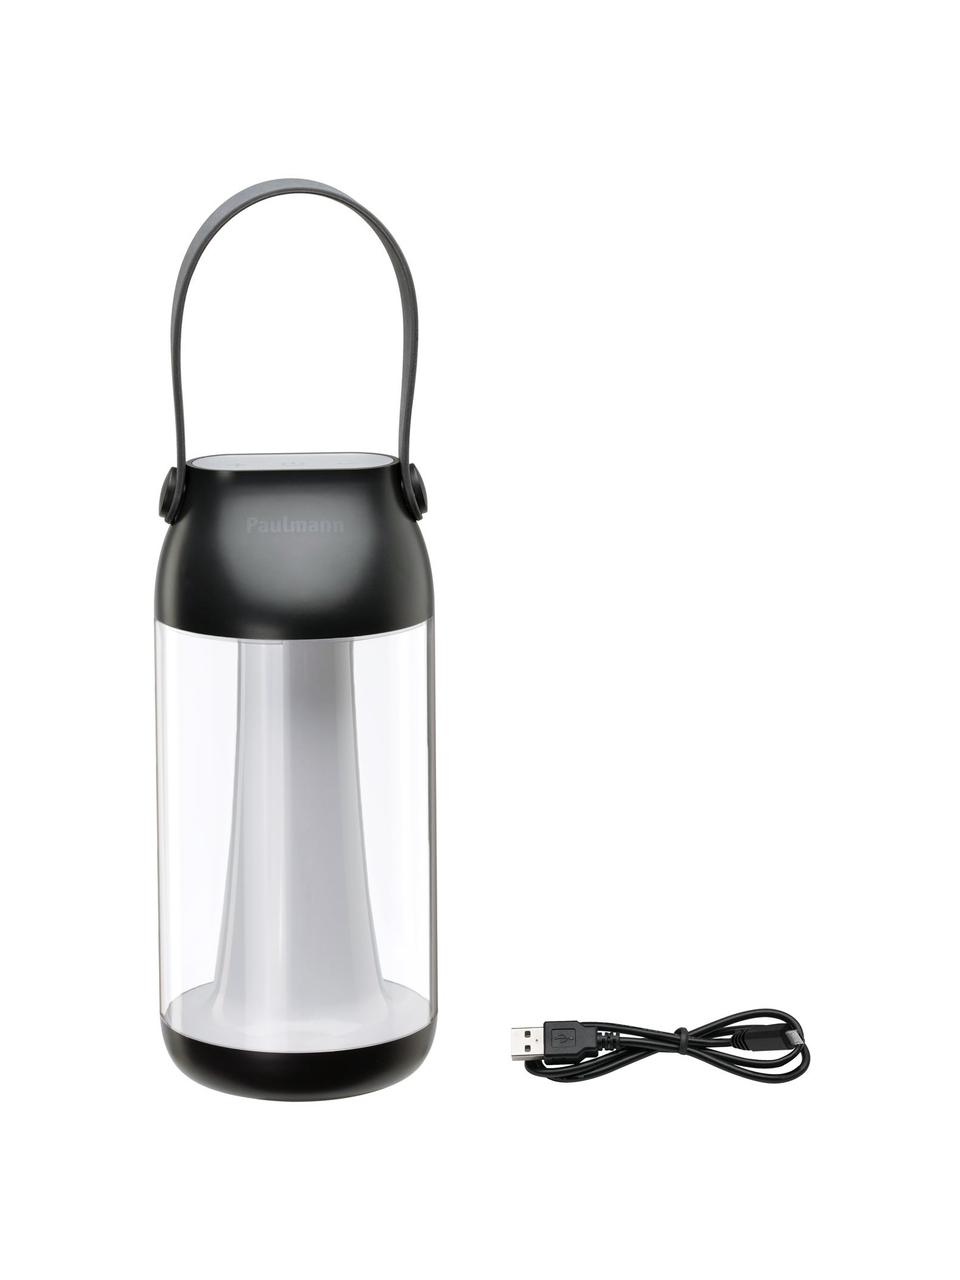 Mobile dimmbare Außentischlampe Capulino, Lampenschirm: Kunststoff, Griff: Kunststoff, Transparent, Anthrazit, Ø 8 cm, H 18 cm